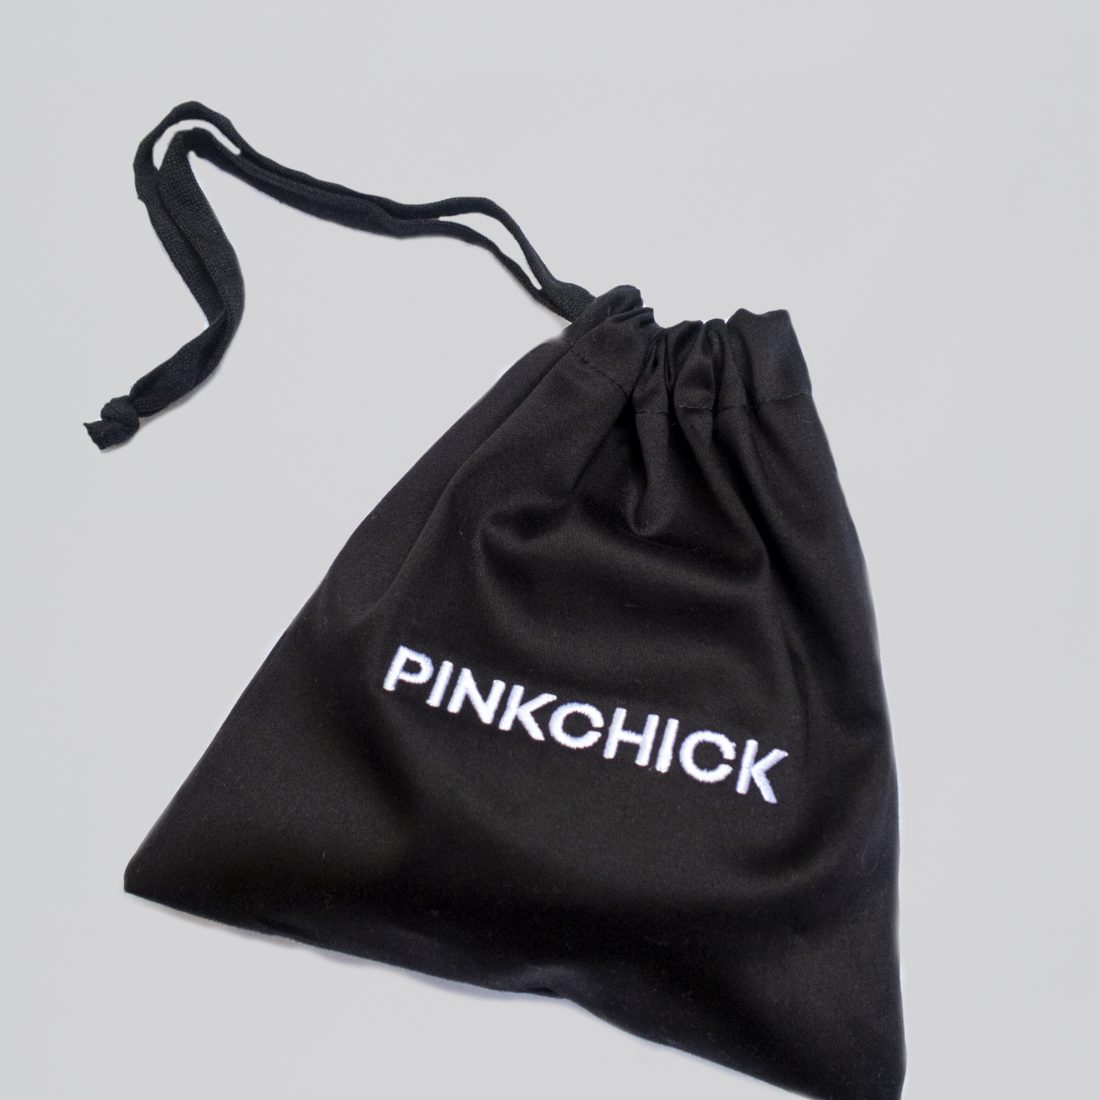 Pinkchick Bag - Black